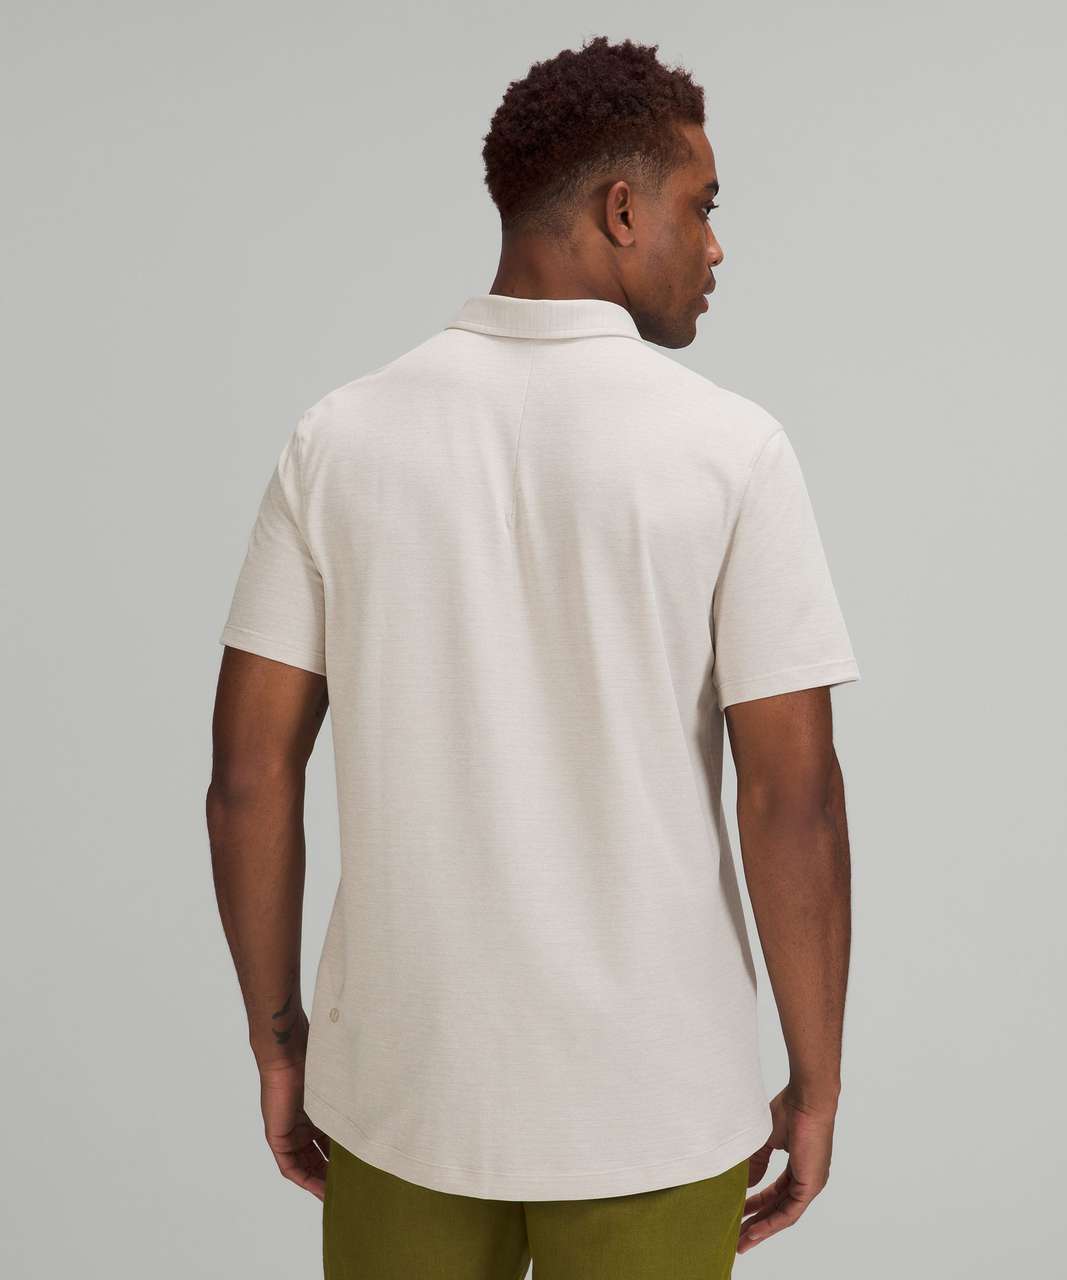 Lululemon Evolution Short Sleeve Polo Shirt *Pique Fabric - Heathered Raw Linen